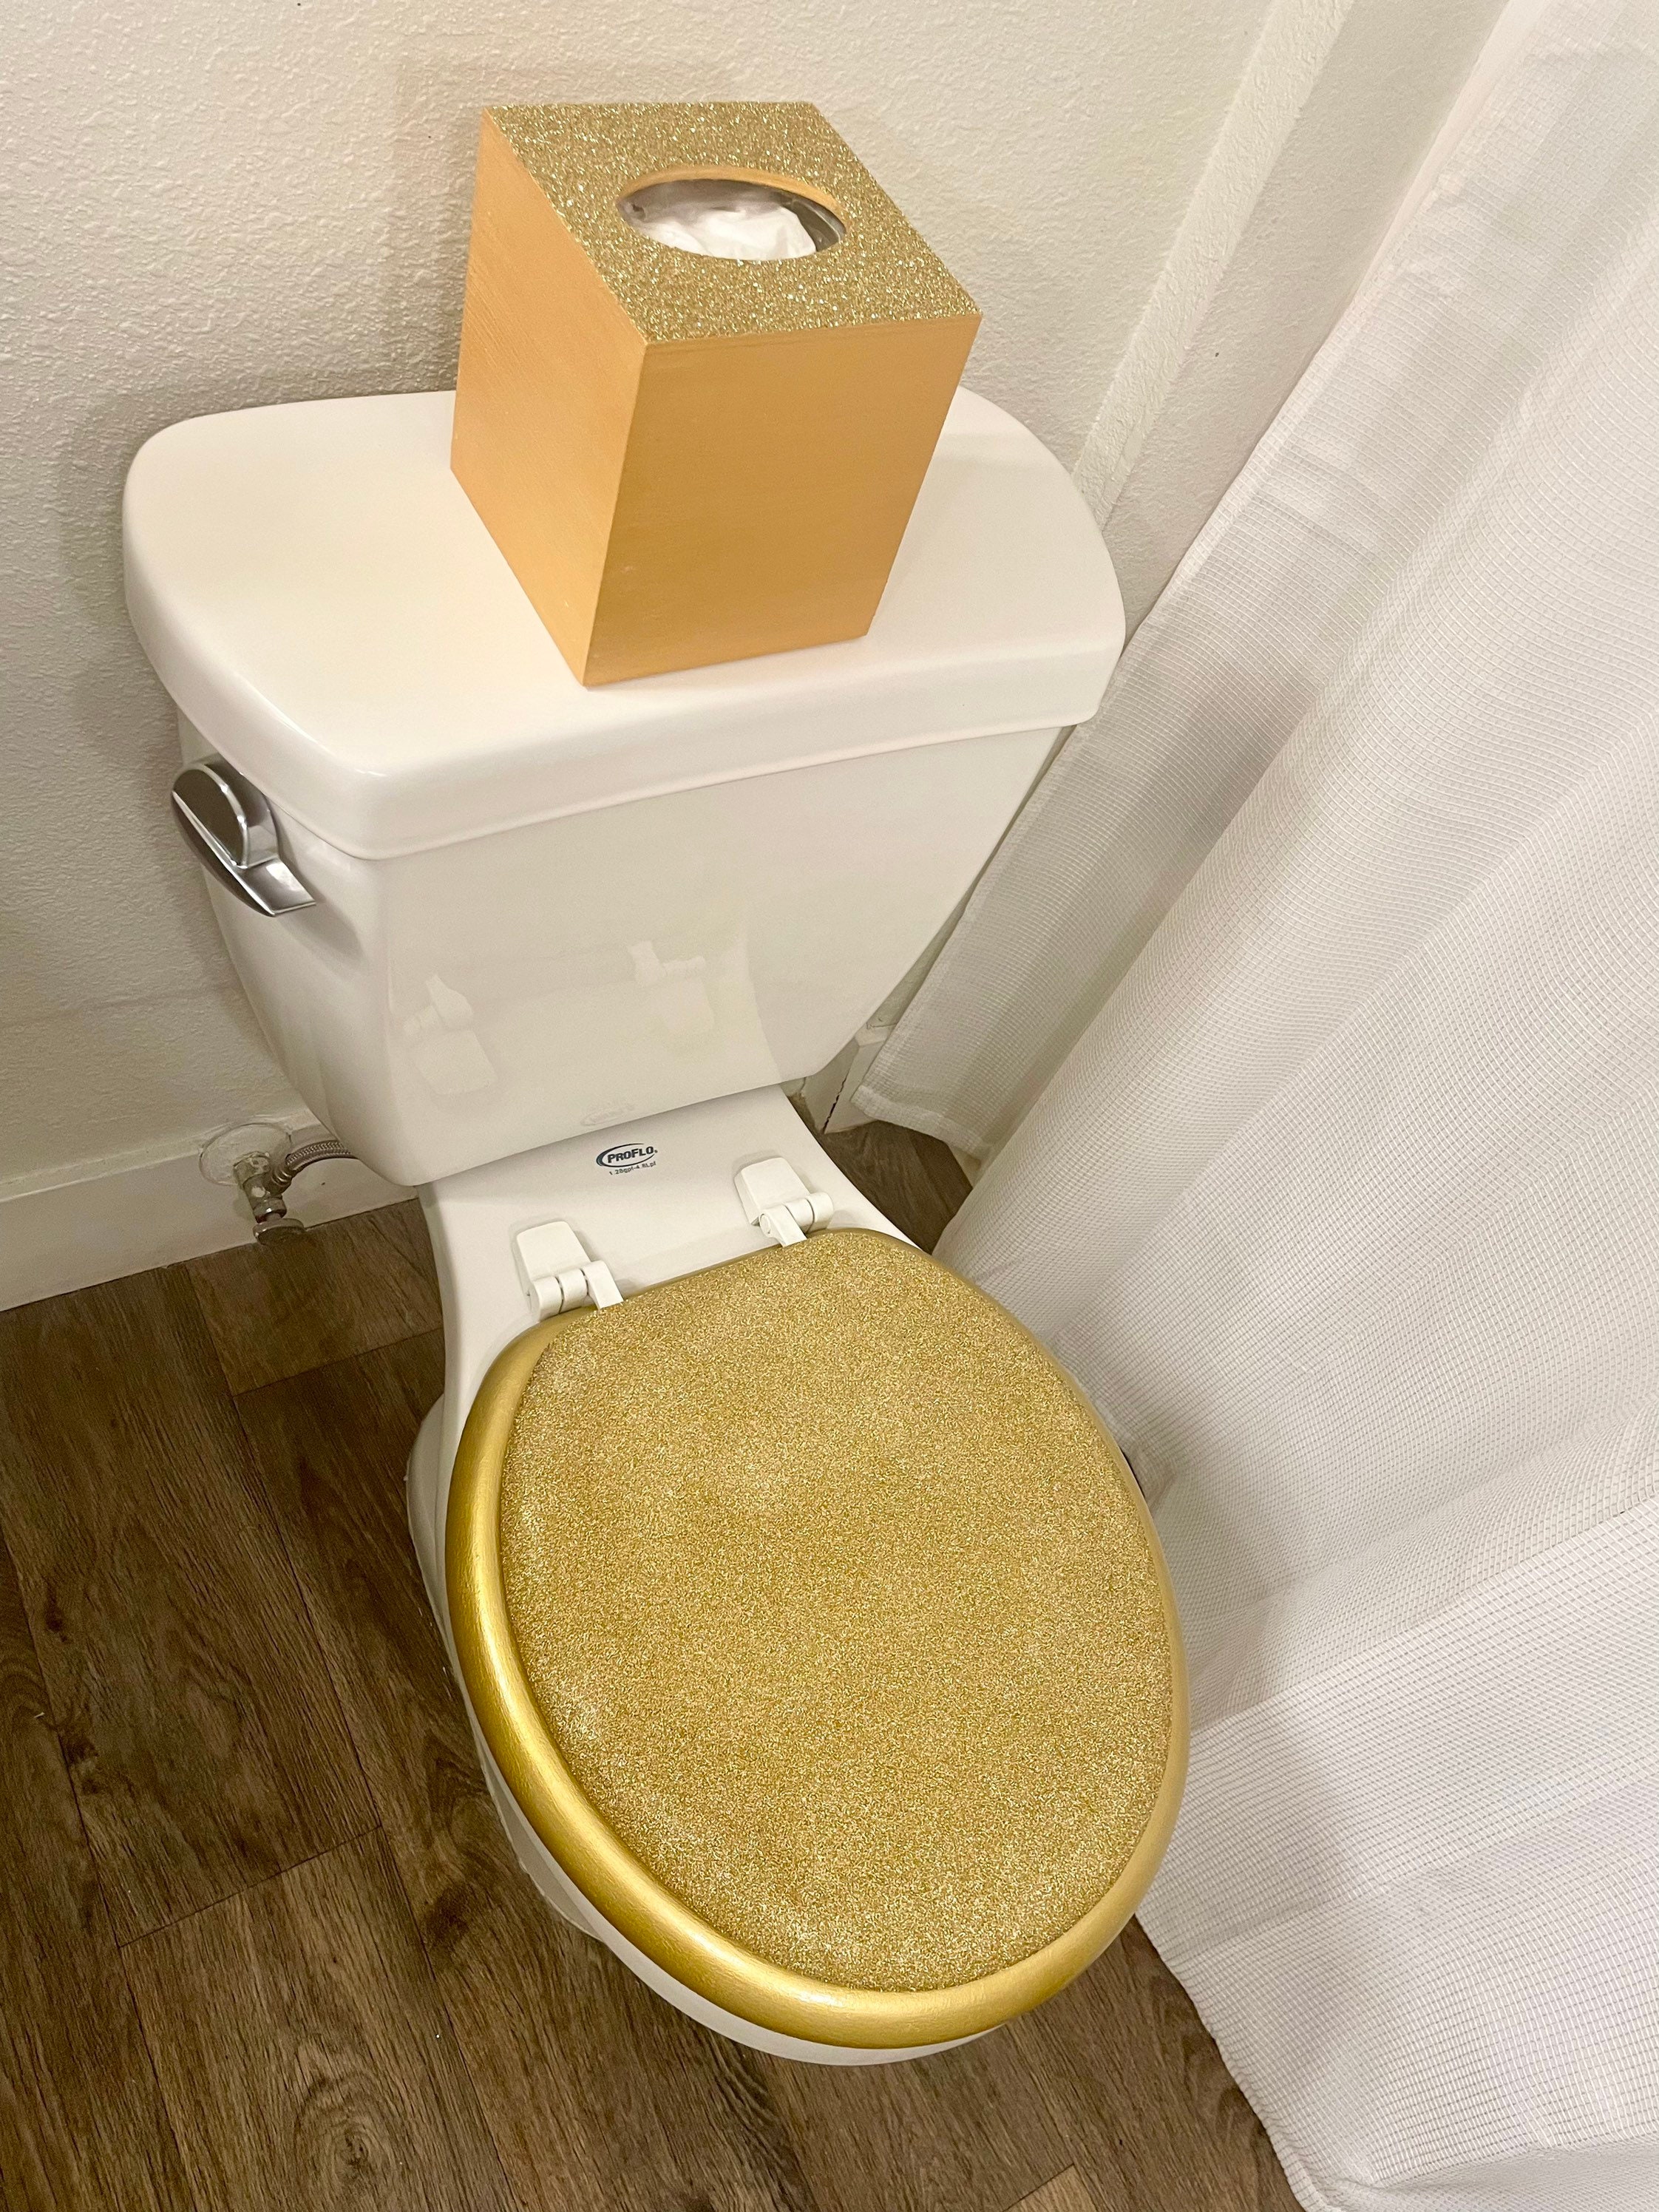 Vulkaan Retentie Farmacologie 14k Gold & Glitter Hand Painted Toilet Seat Set - Etsy Nederland